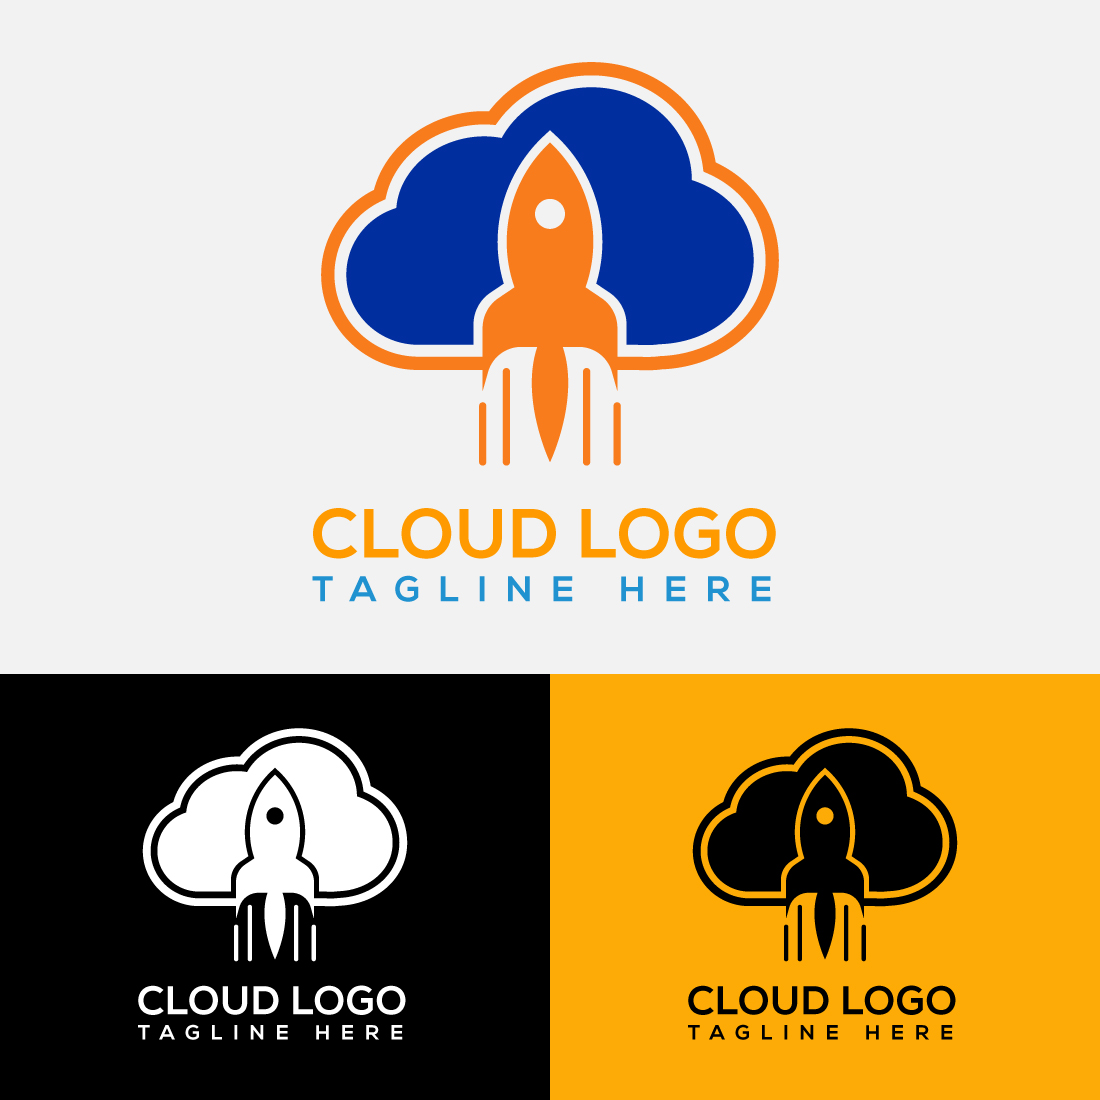 Provider Tech Logo Template cover image.